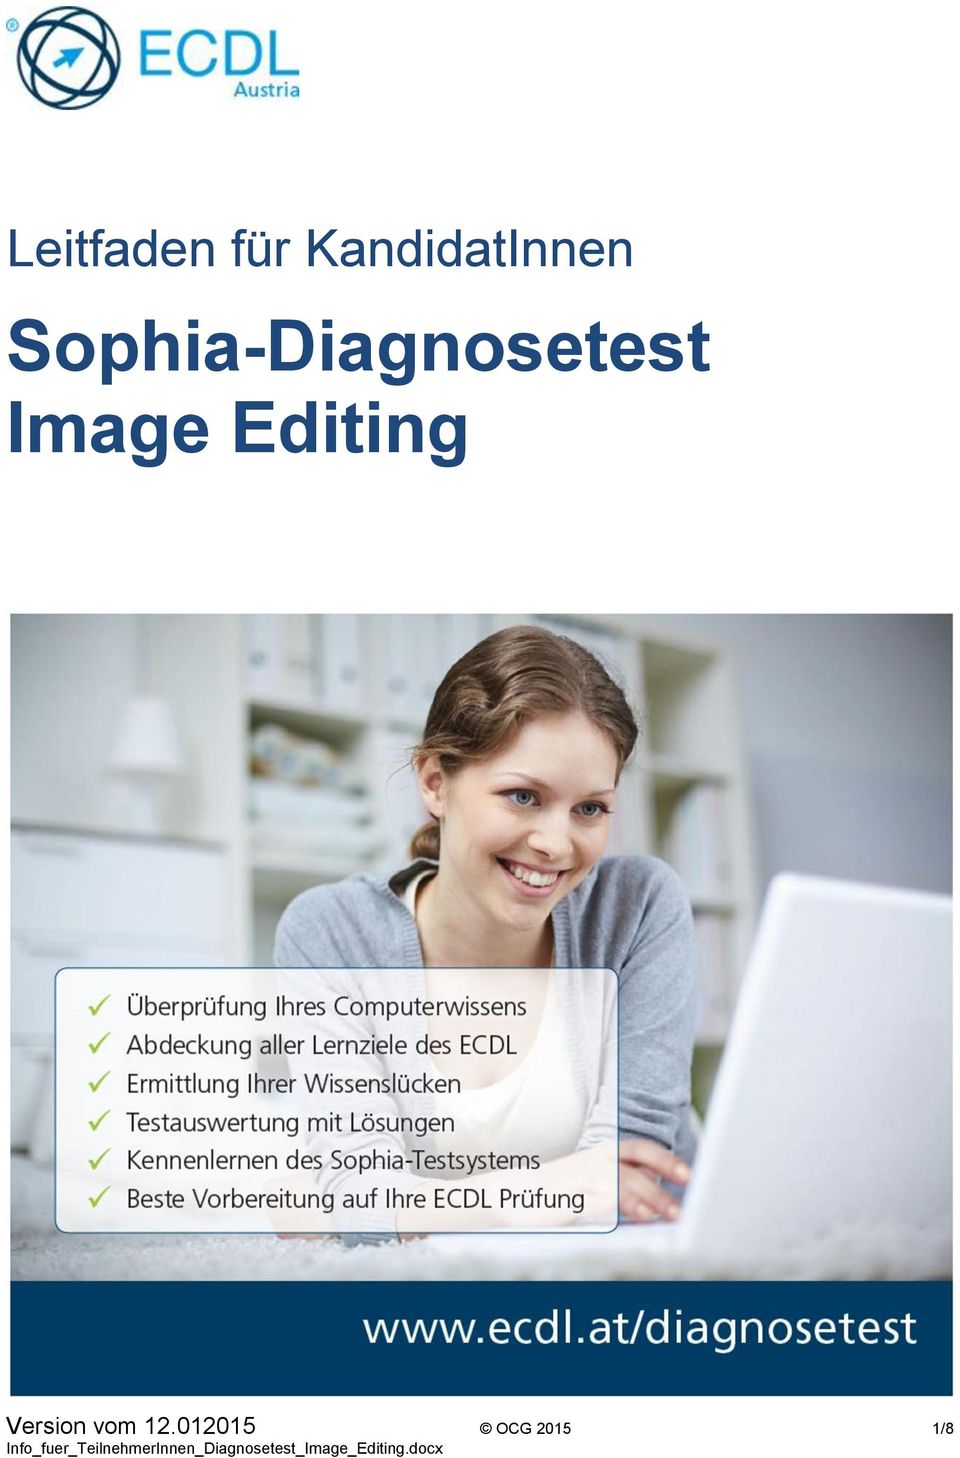 Sophia-Diagnosetest